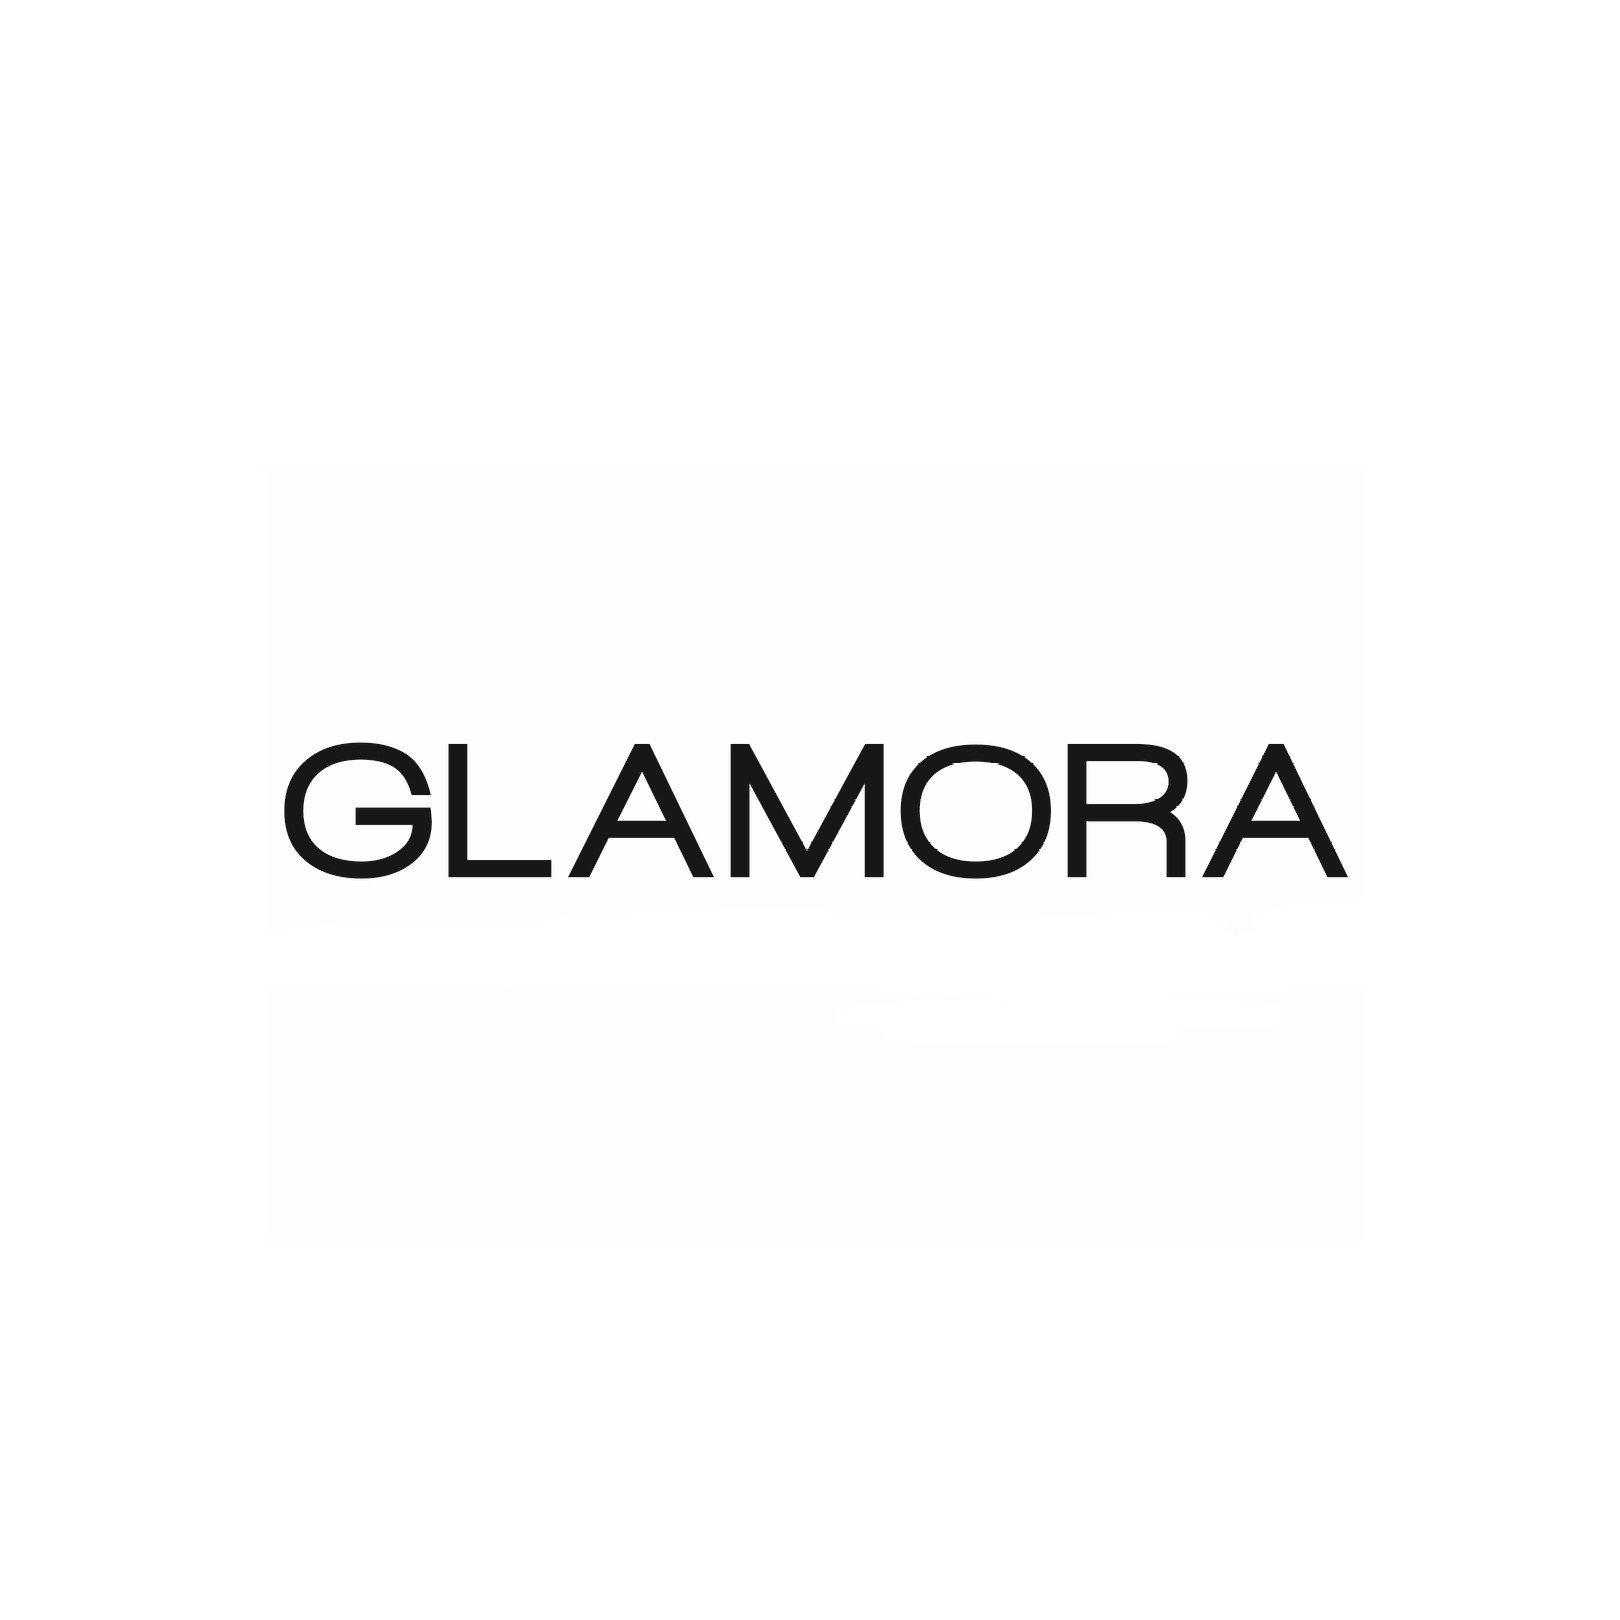 406-glamoradesign-wallpaper-scaled-to-fit-logo.jpg